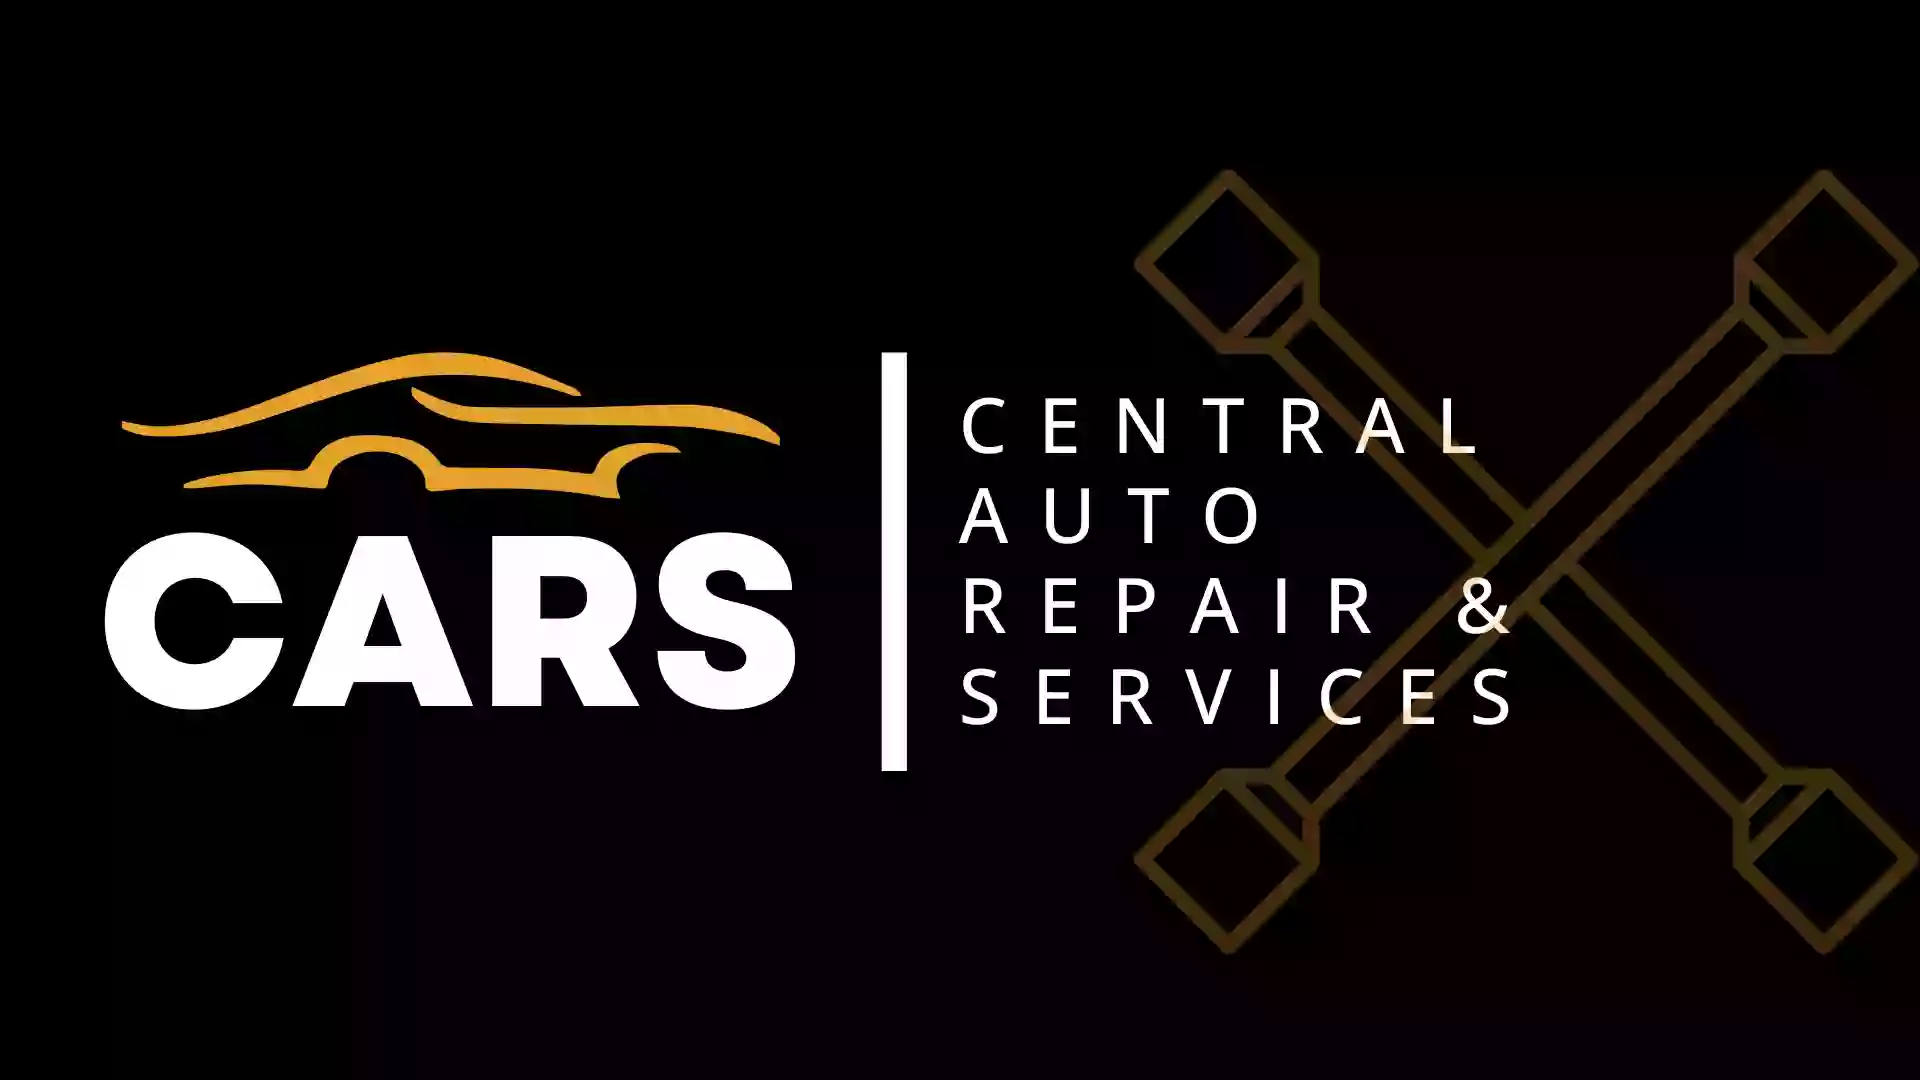 Central Auto Repair & Services